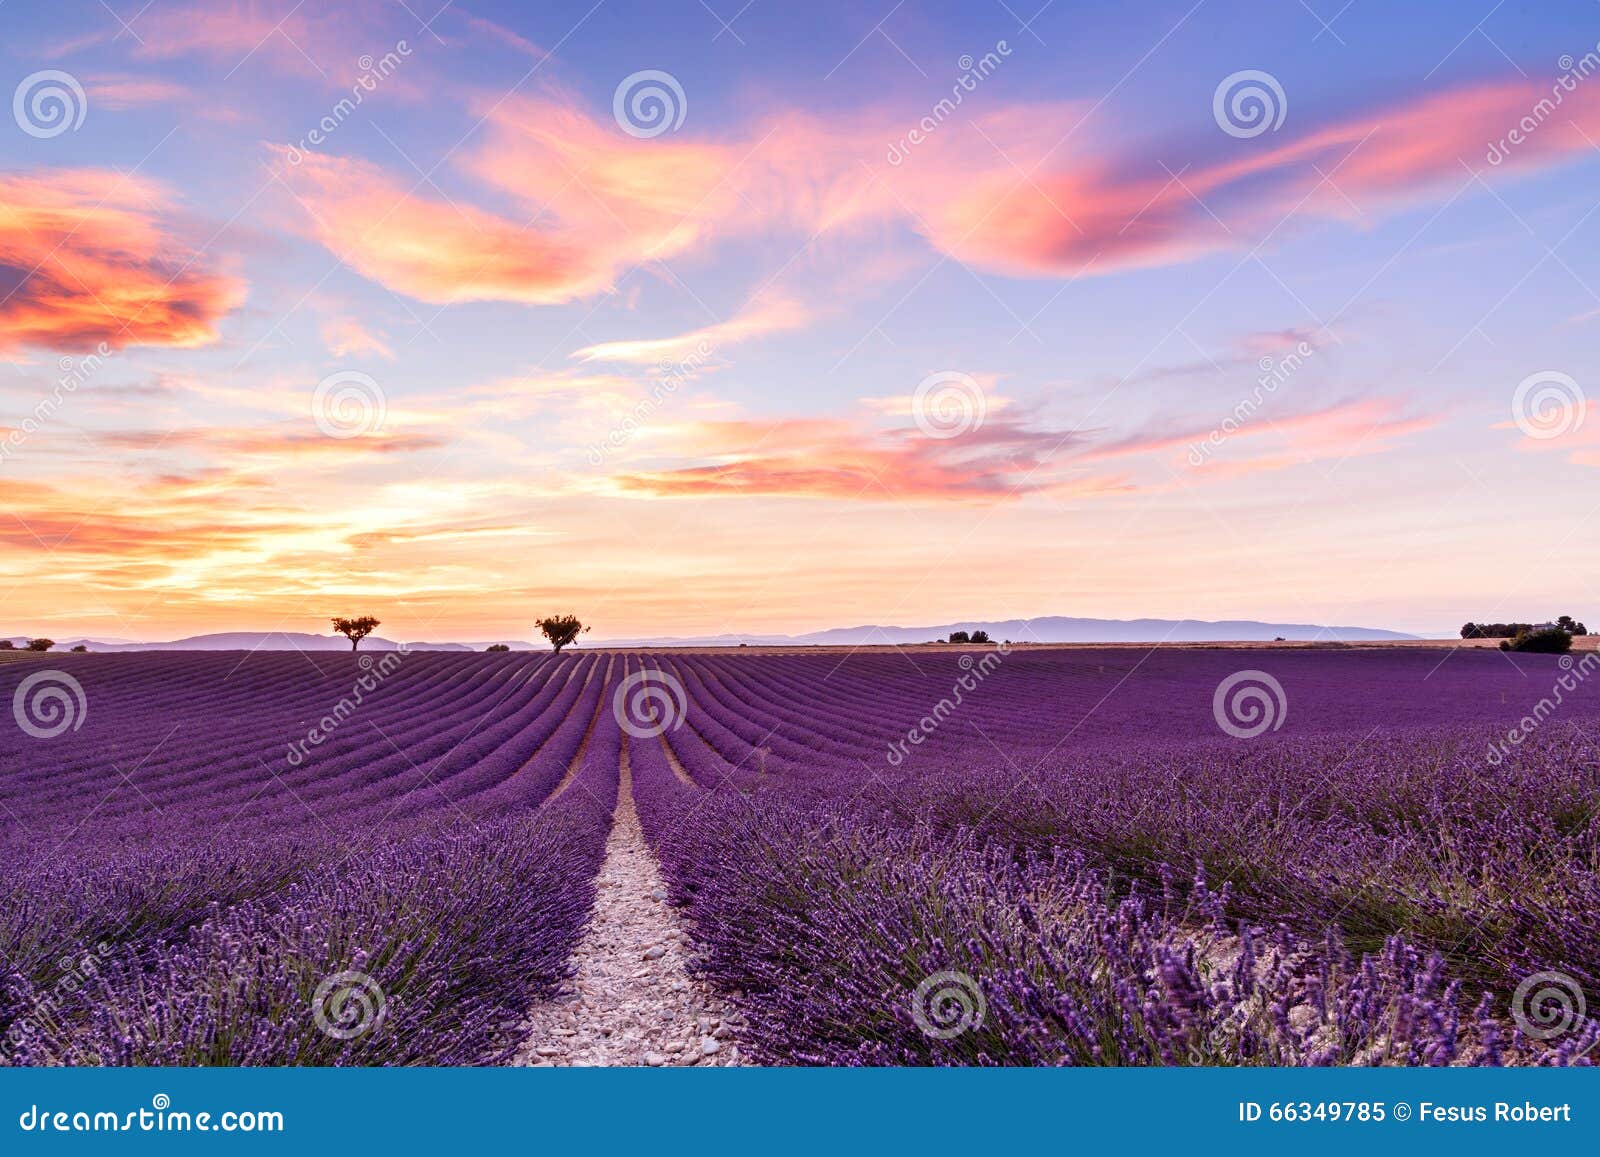 Lavender Field Summer Sunset Landscape in Provence Stock Image - Image ...